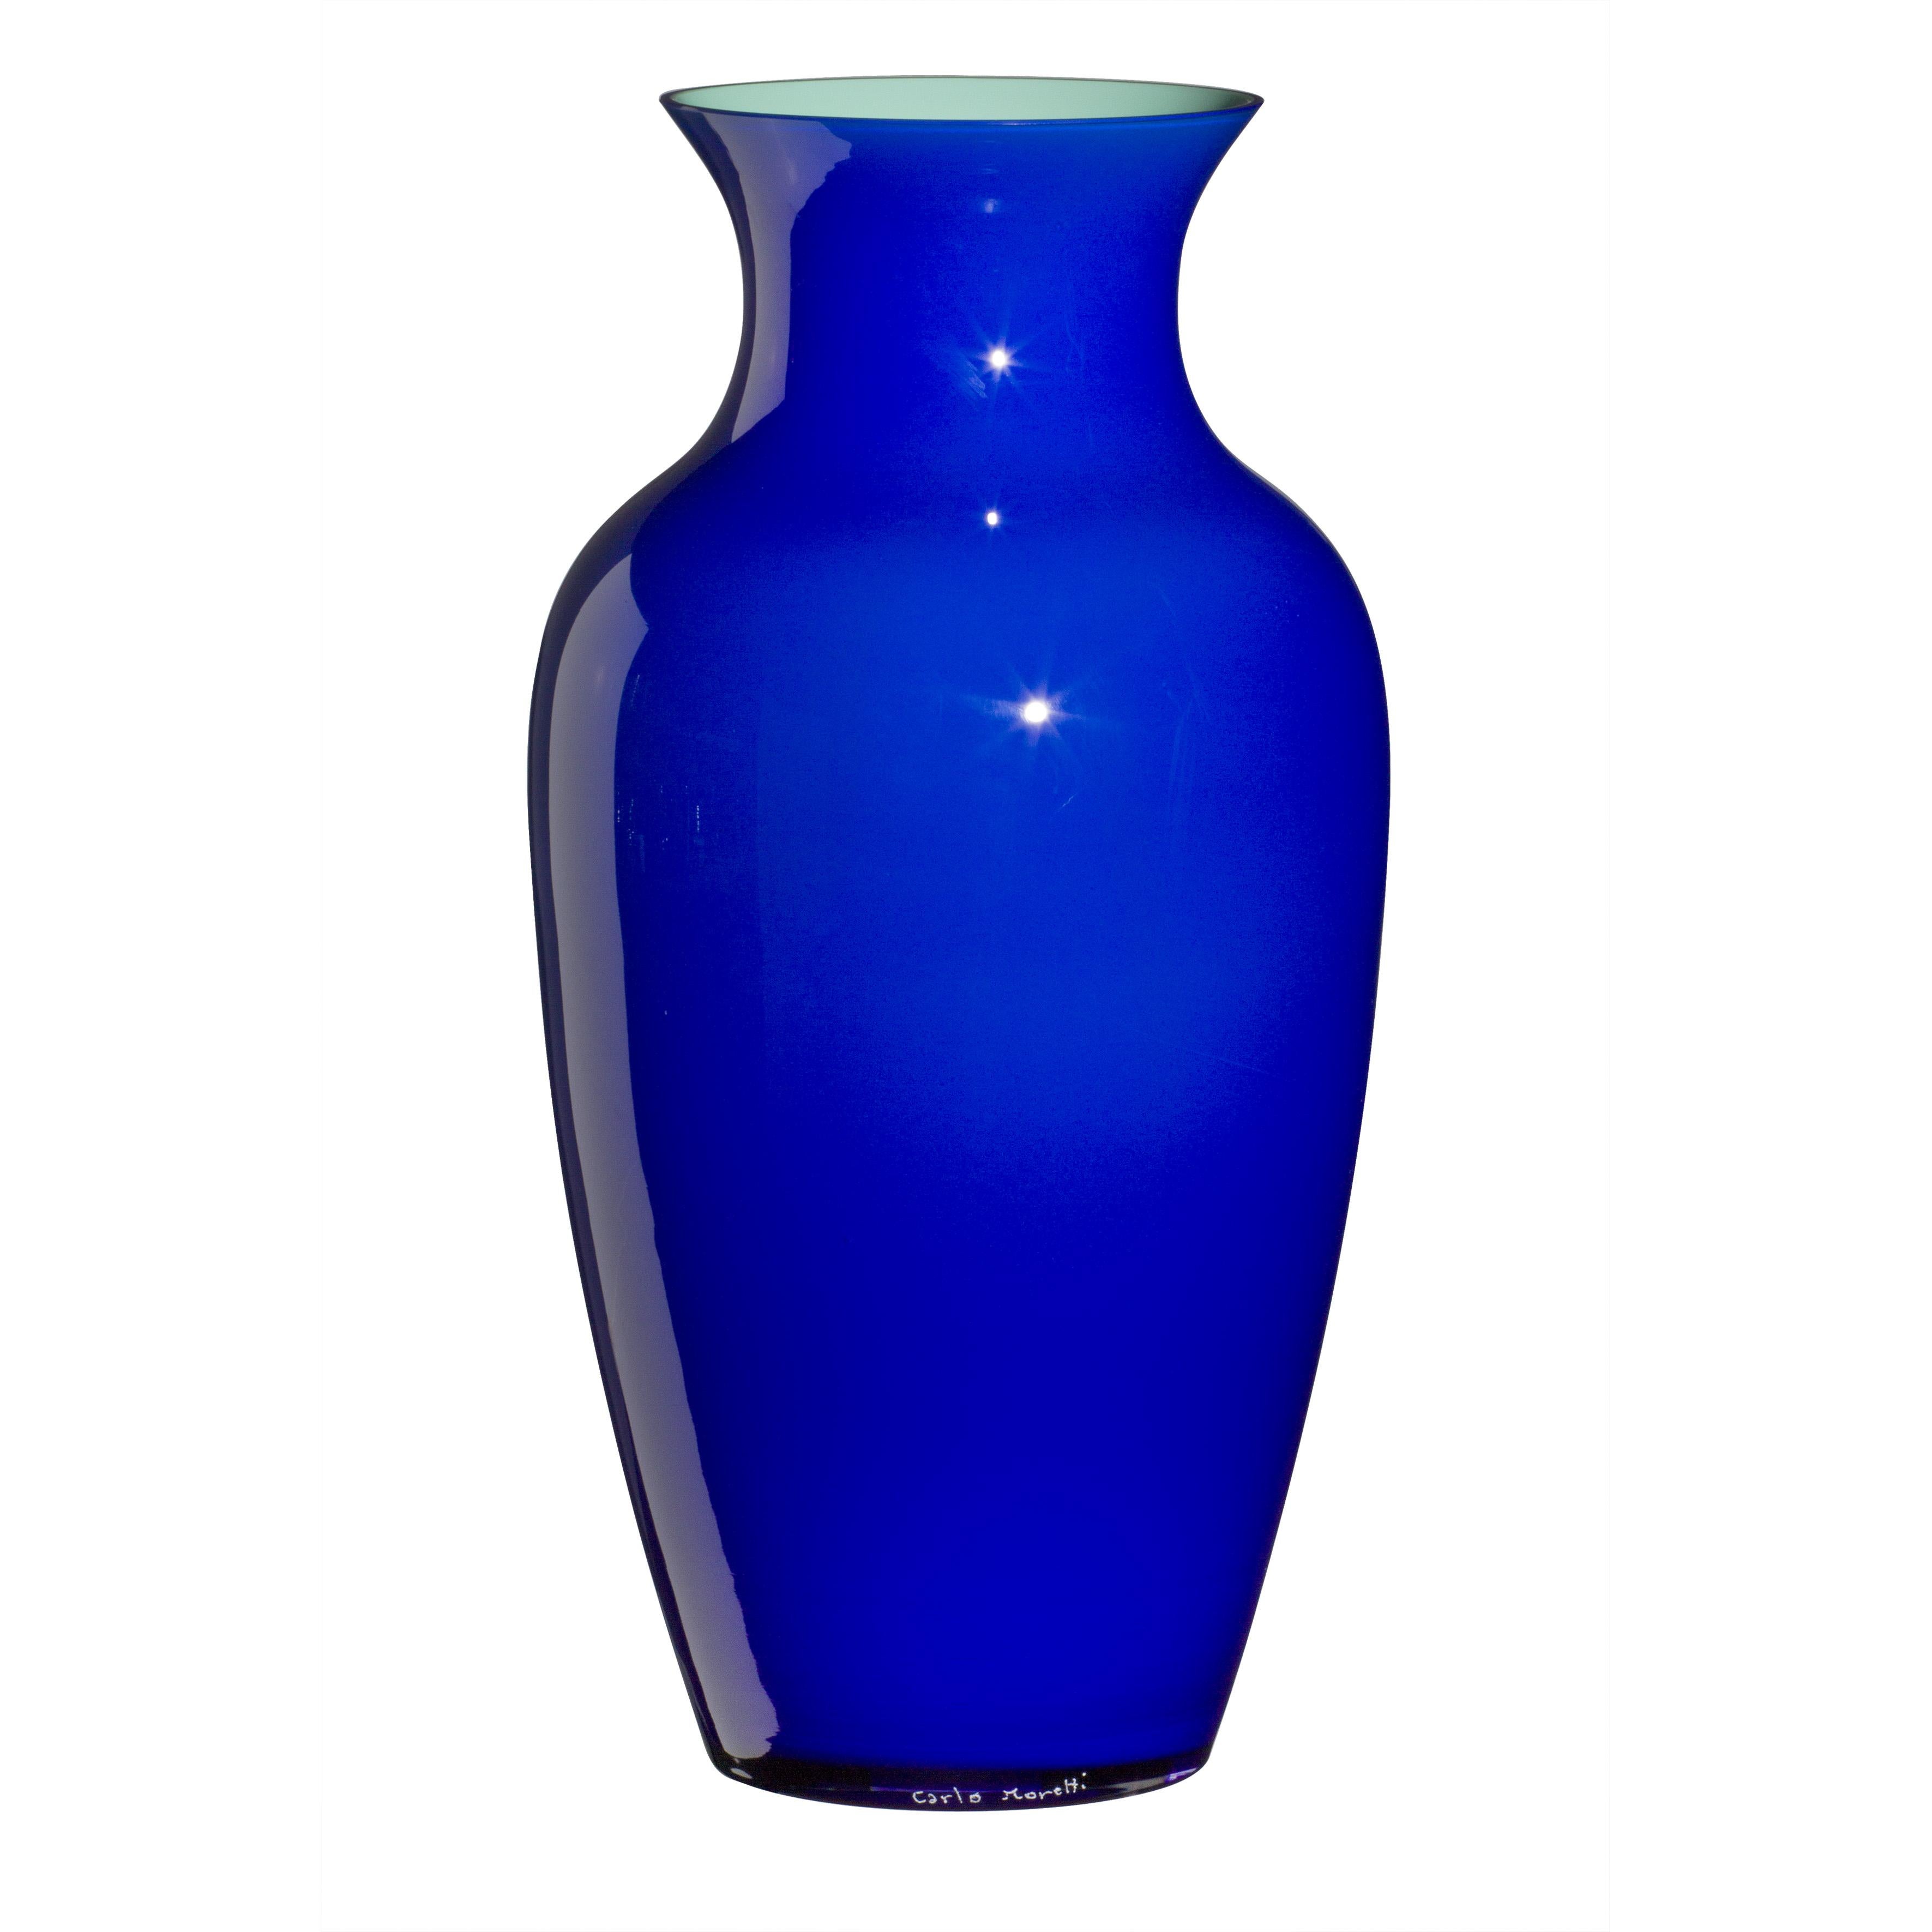 Grand vase I Cinesi bleu cobalt par Carlo Moretti